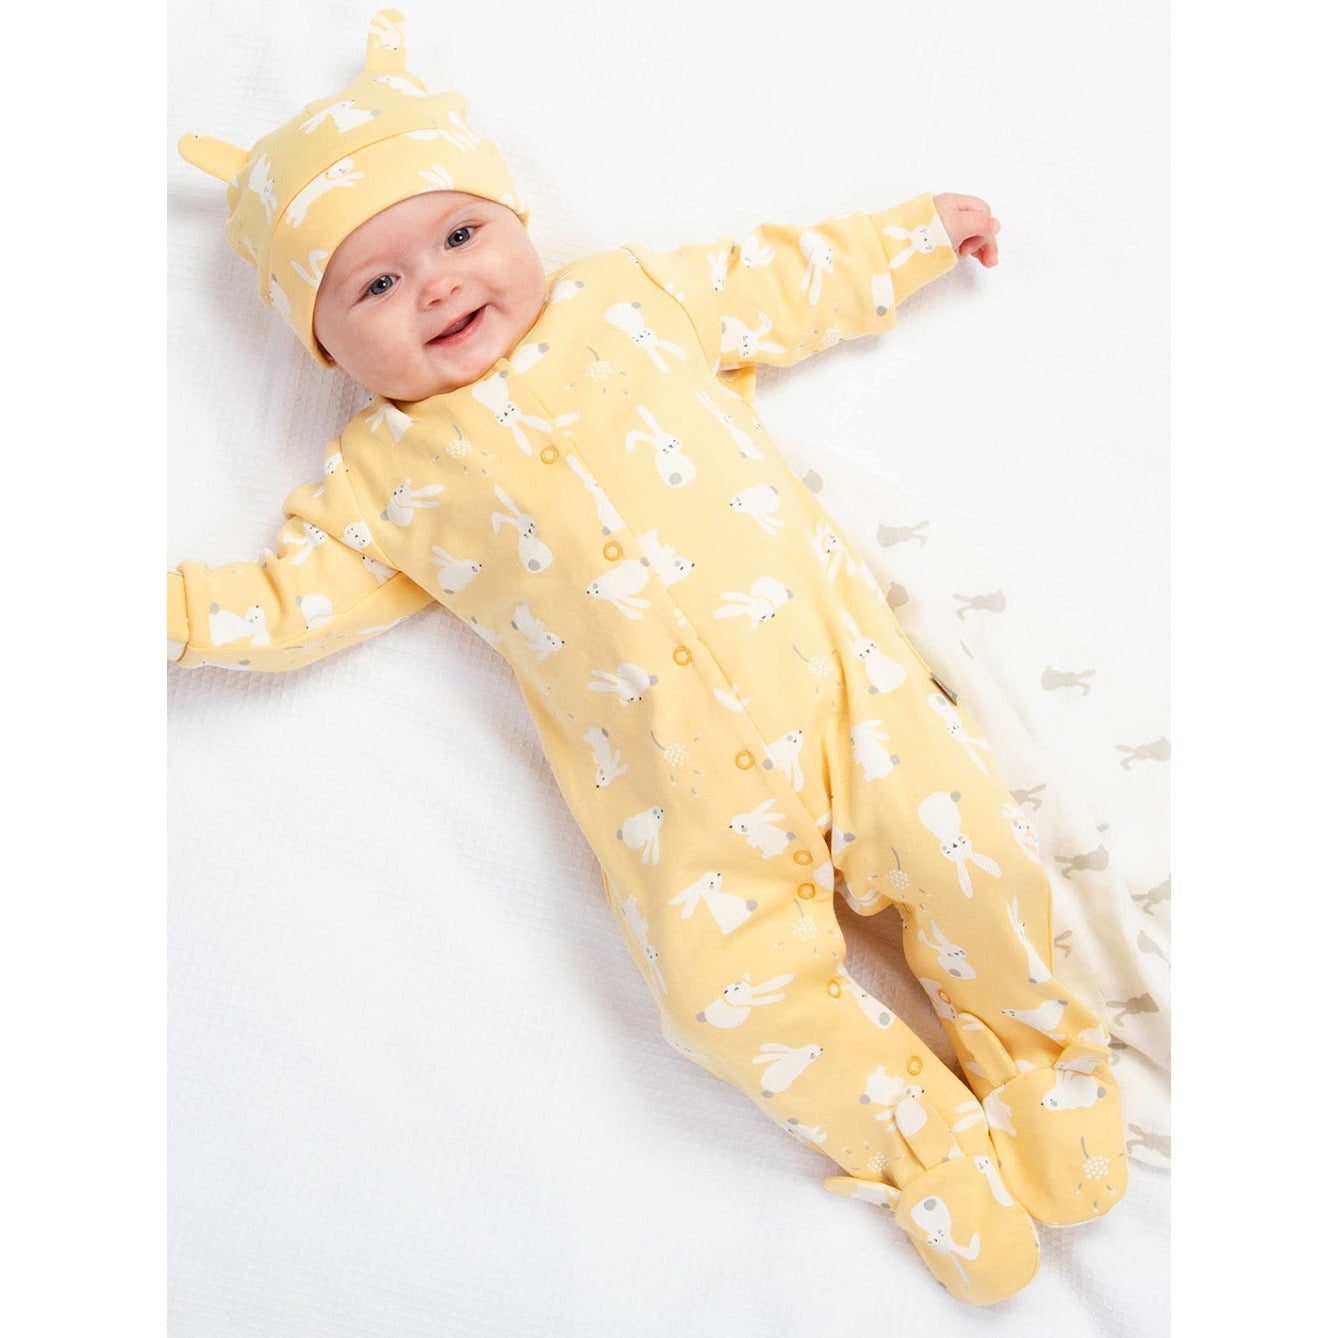 Kite Bunny Time Sleepsuit 8267 Clothing NEWBORN / Yellow,0-1M / Yellow,1M / Yellow,0-3M / Yellow,3-6M / Yellow,6-9M / Yellow